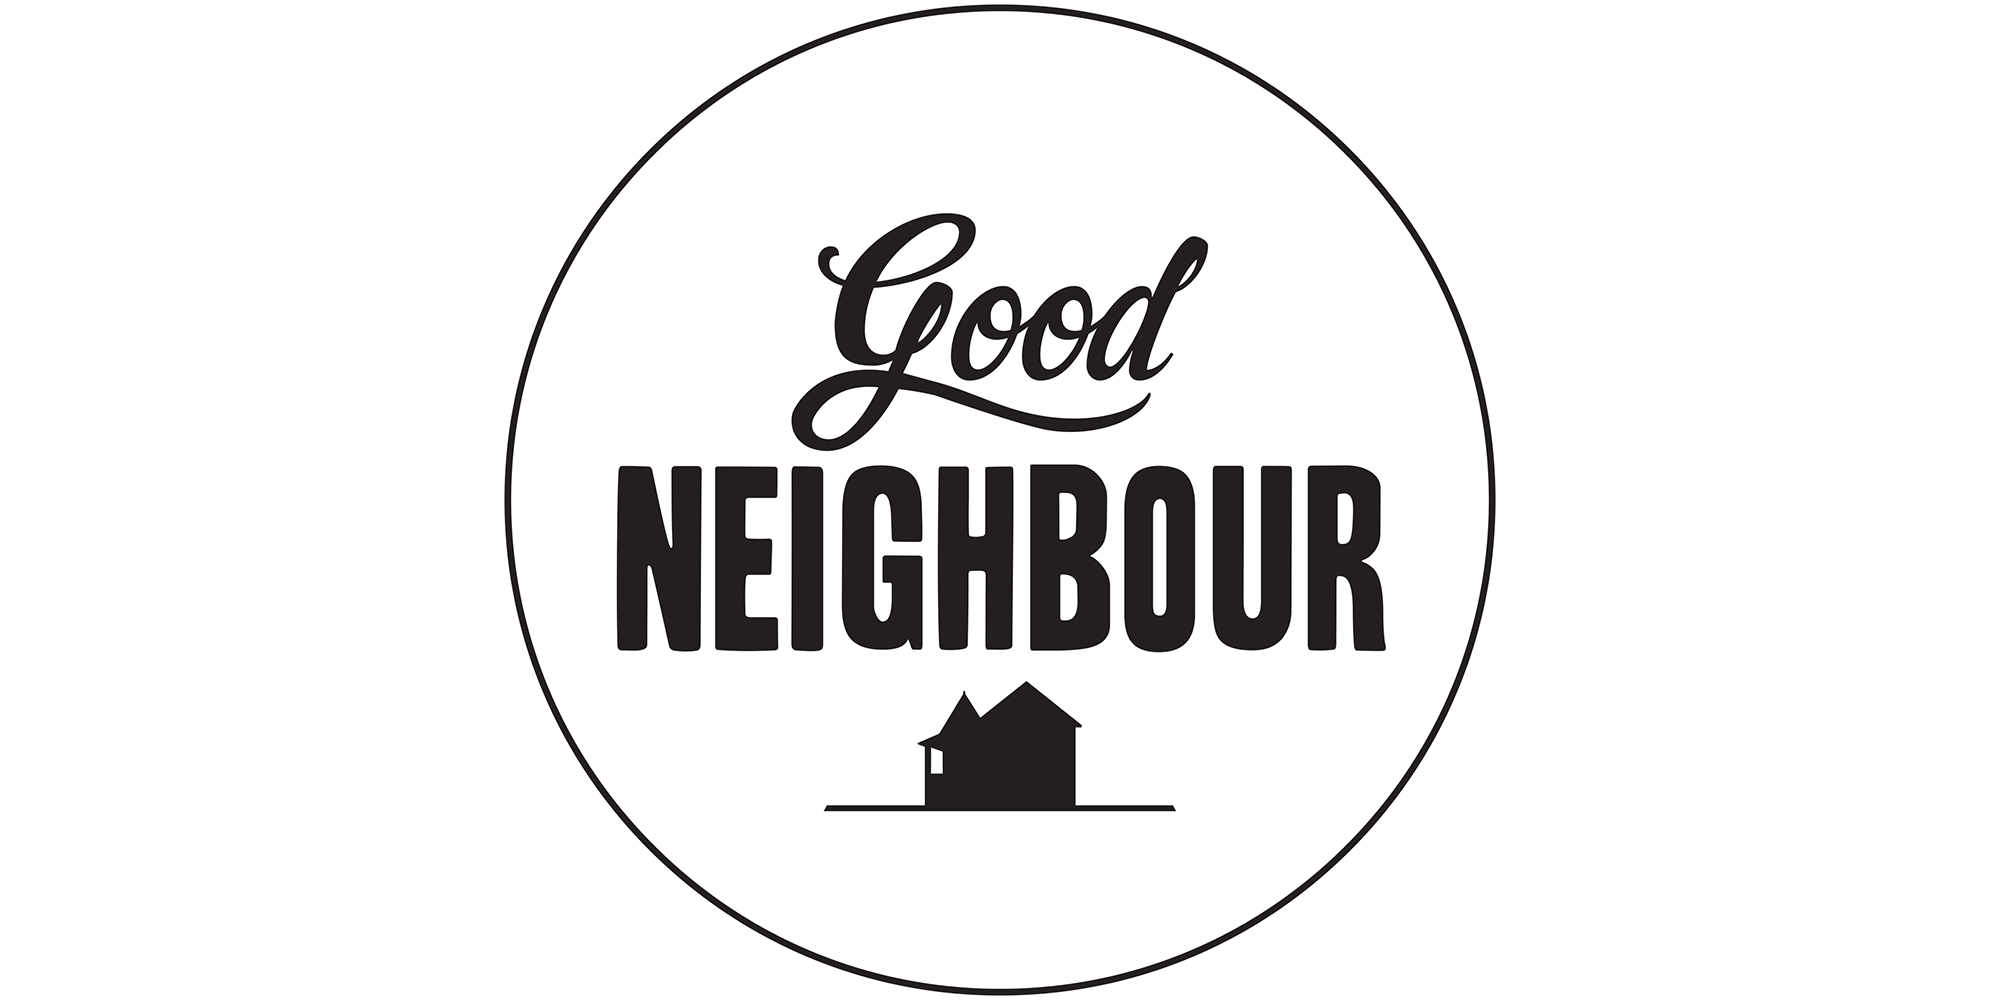 Good neighbor